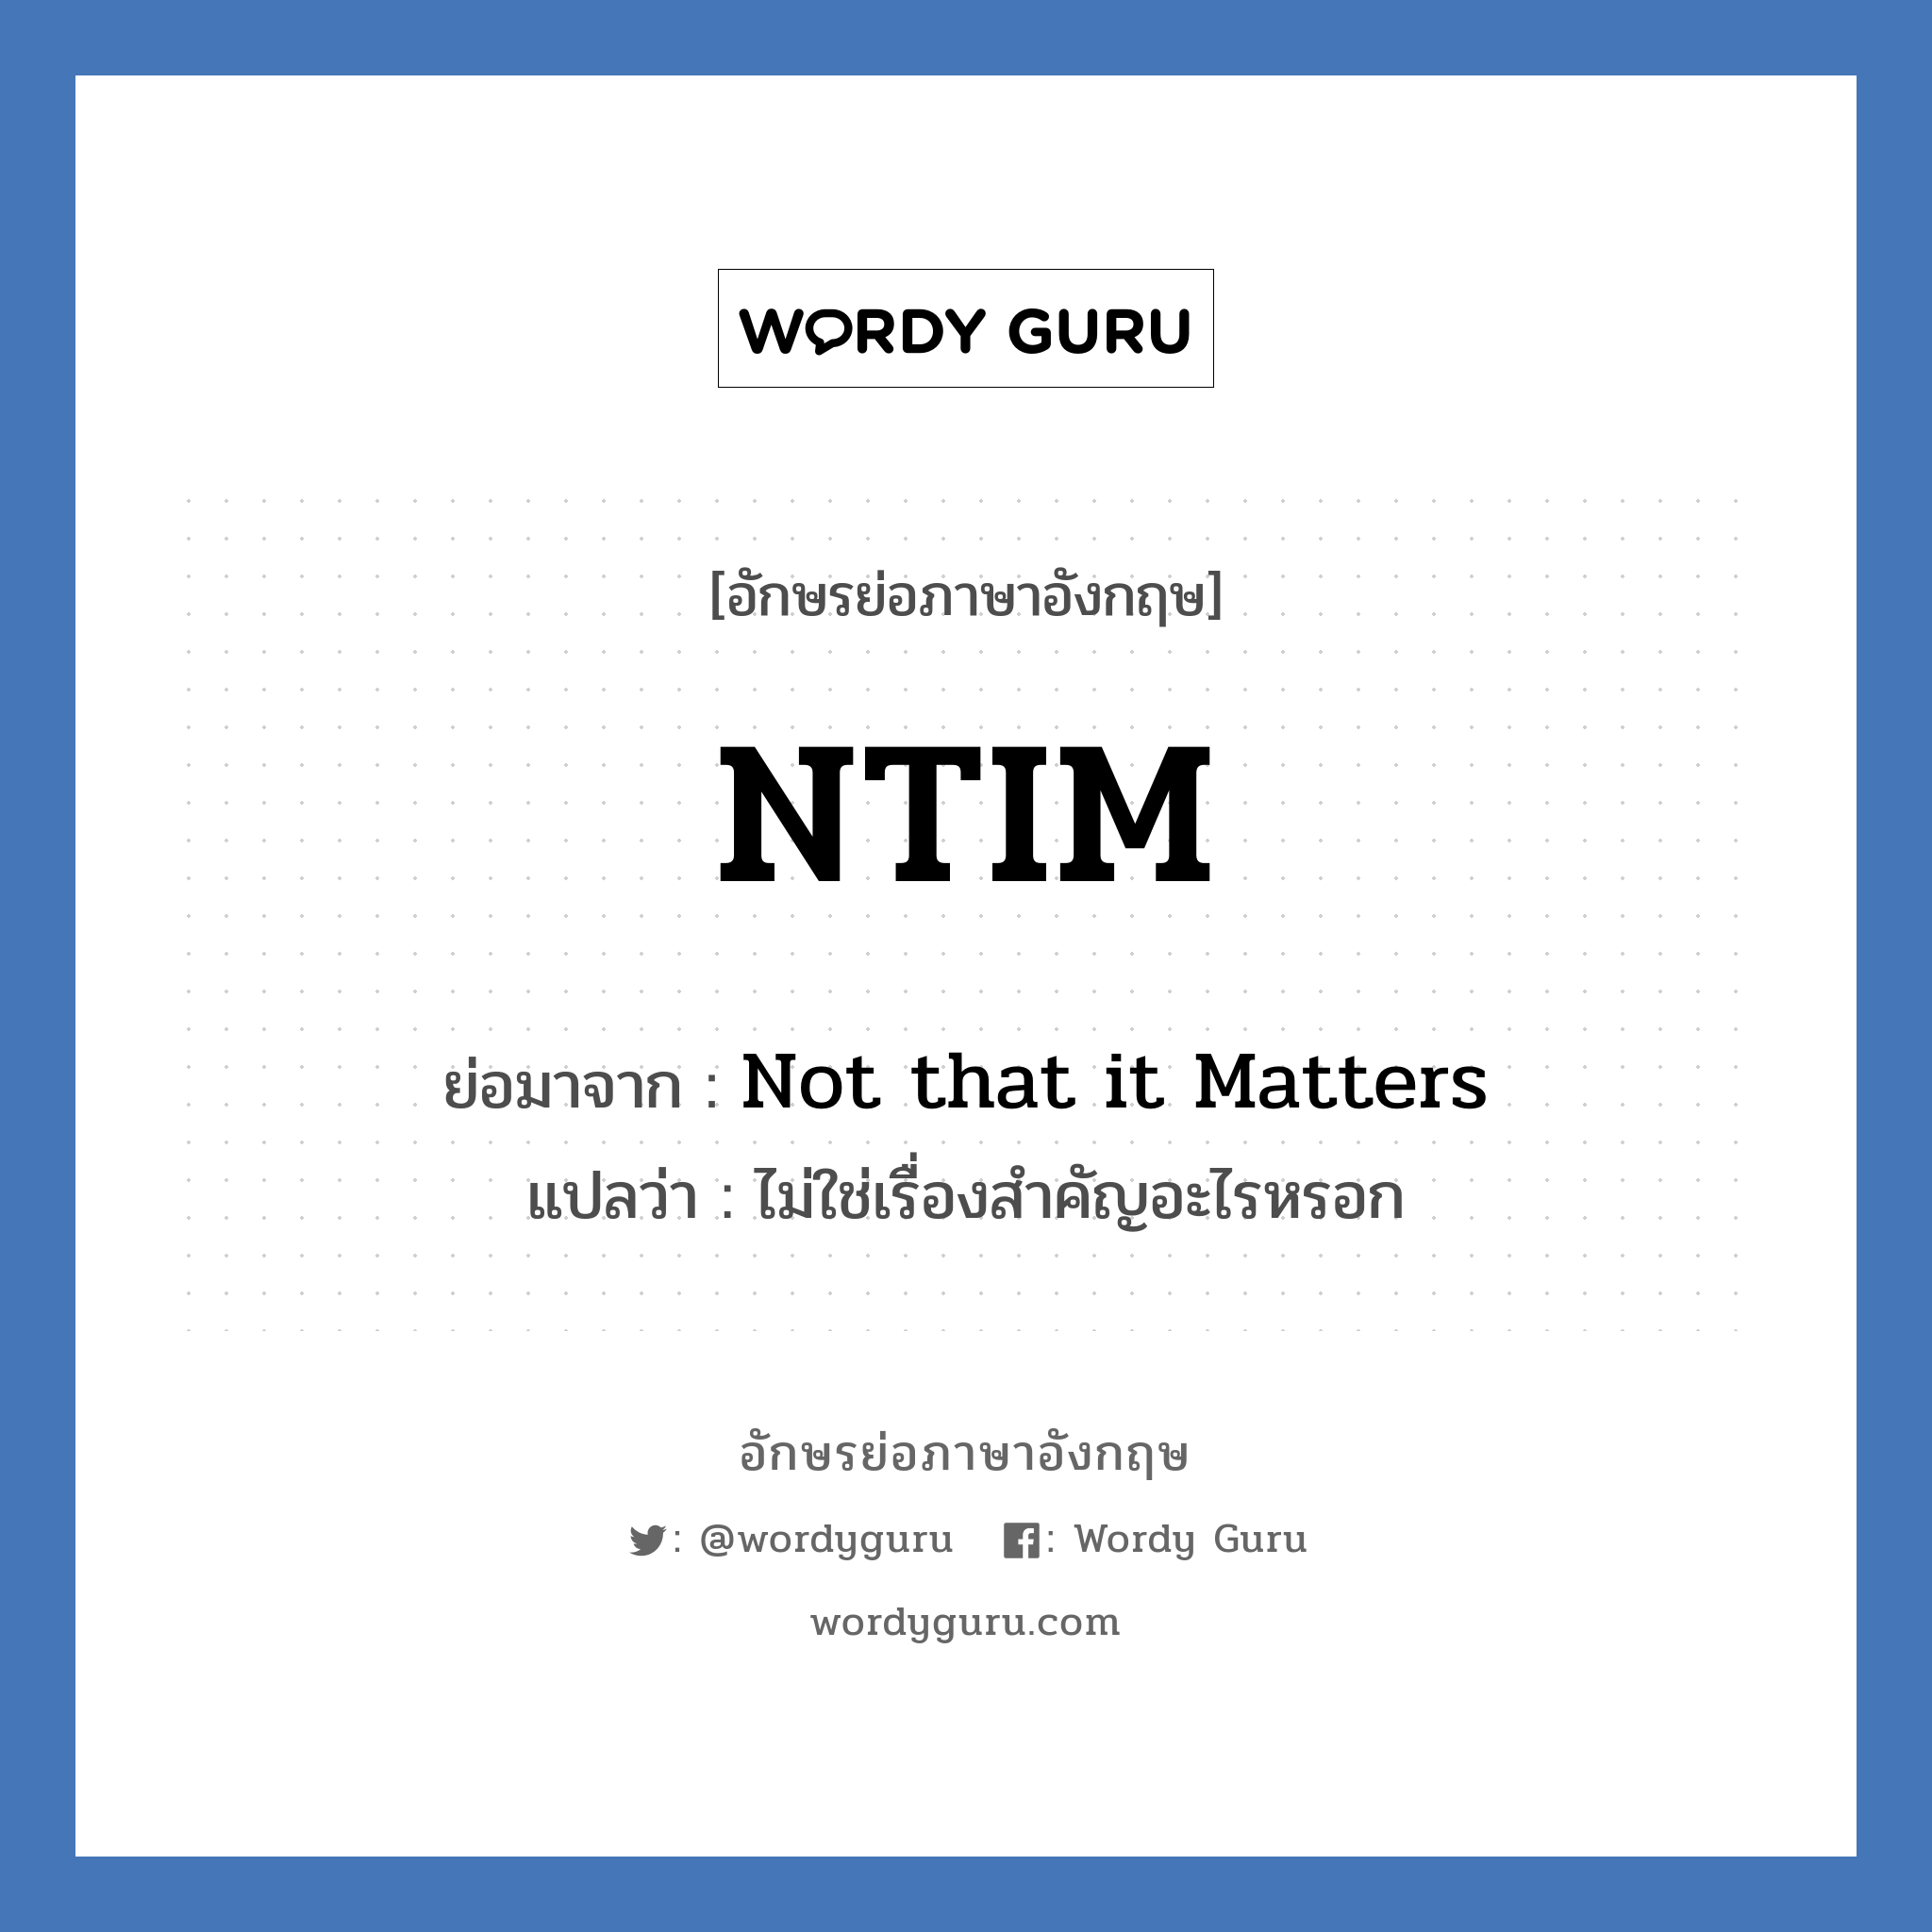 Not that it Matters คำย่อคือ? แปลว่า?, อักษรย่อภาษาอังกฤษ Not that it Matters ย่อมาจาก NTIM แปลว่า ไม่ใช่เรื่องสำคัญอะไรหรอก